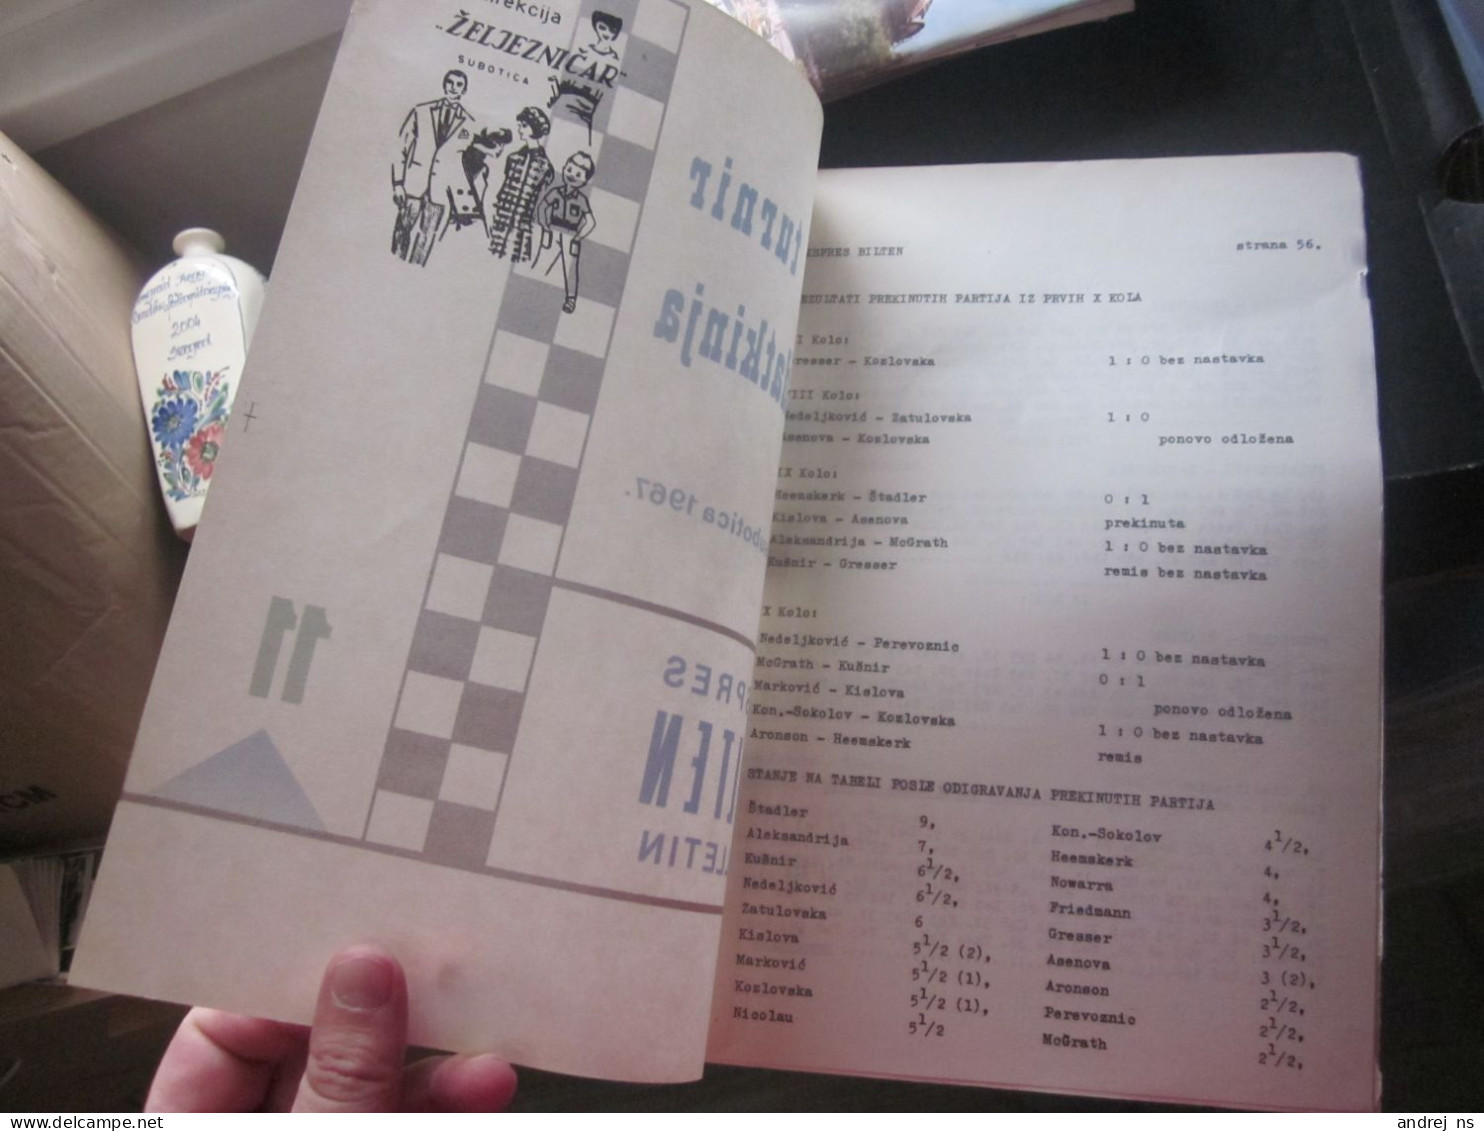 Chess Ekspres Bilten Bulletin Subotica Szabadka 1967 - Programs